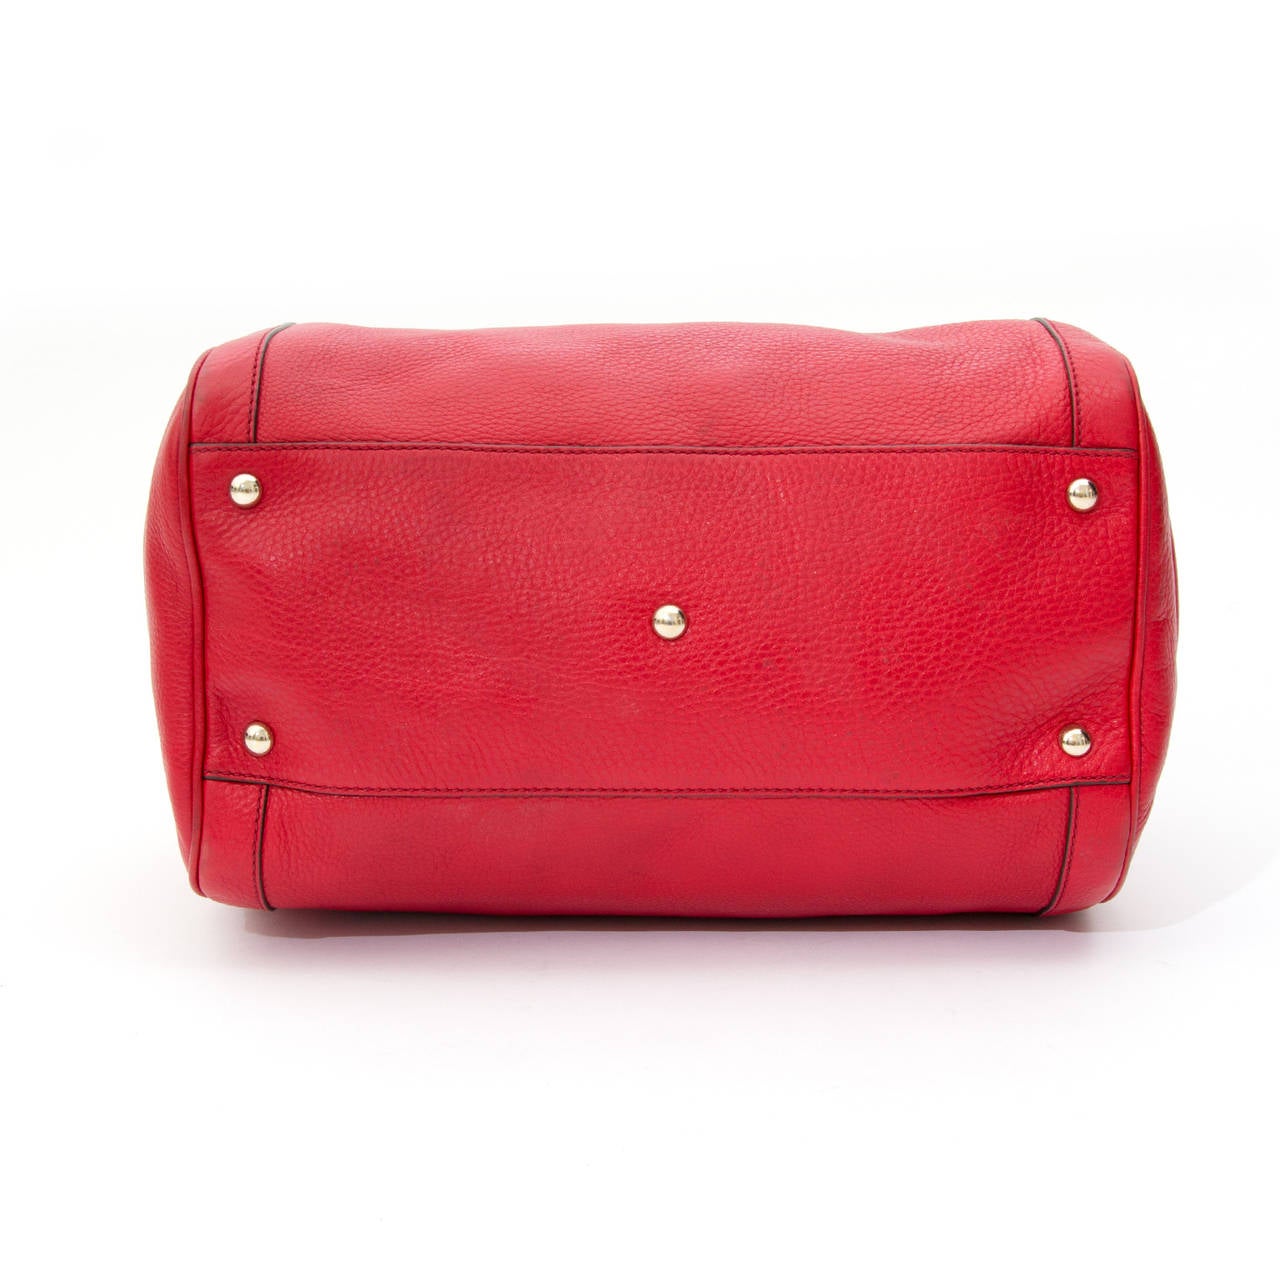 Red Gucci Boston bag with GC Logo stitchin the sides. 

W33cm x H22.5cm x W18cm